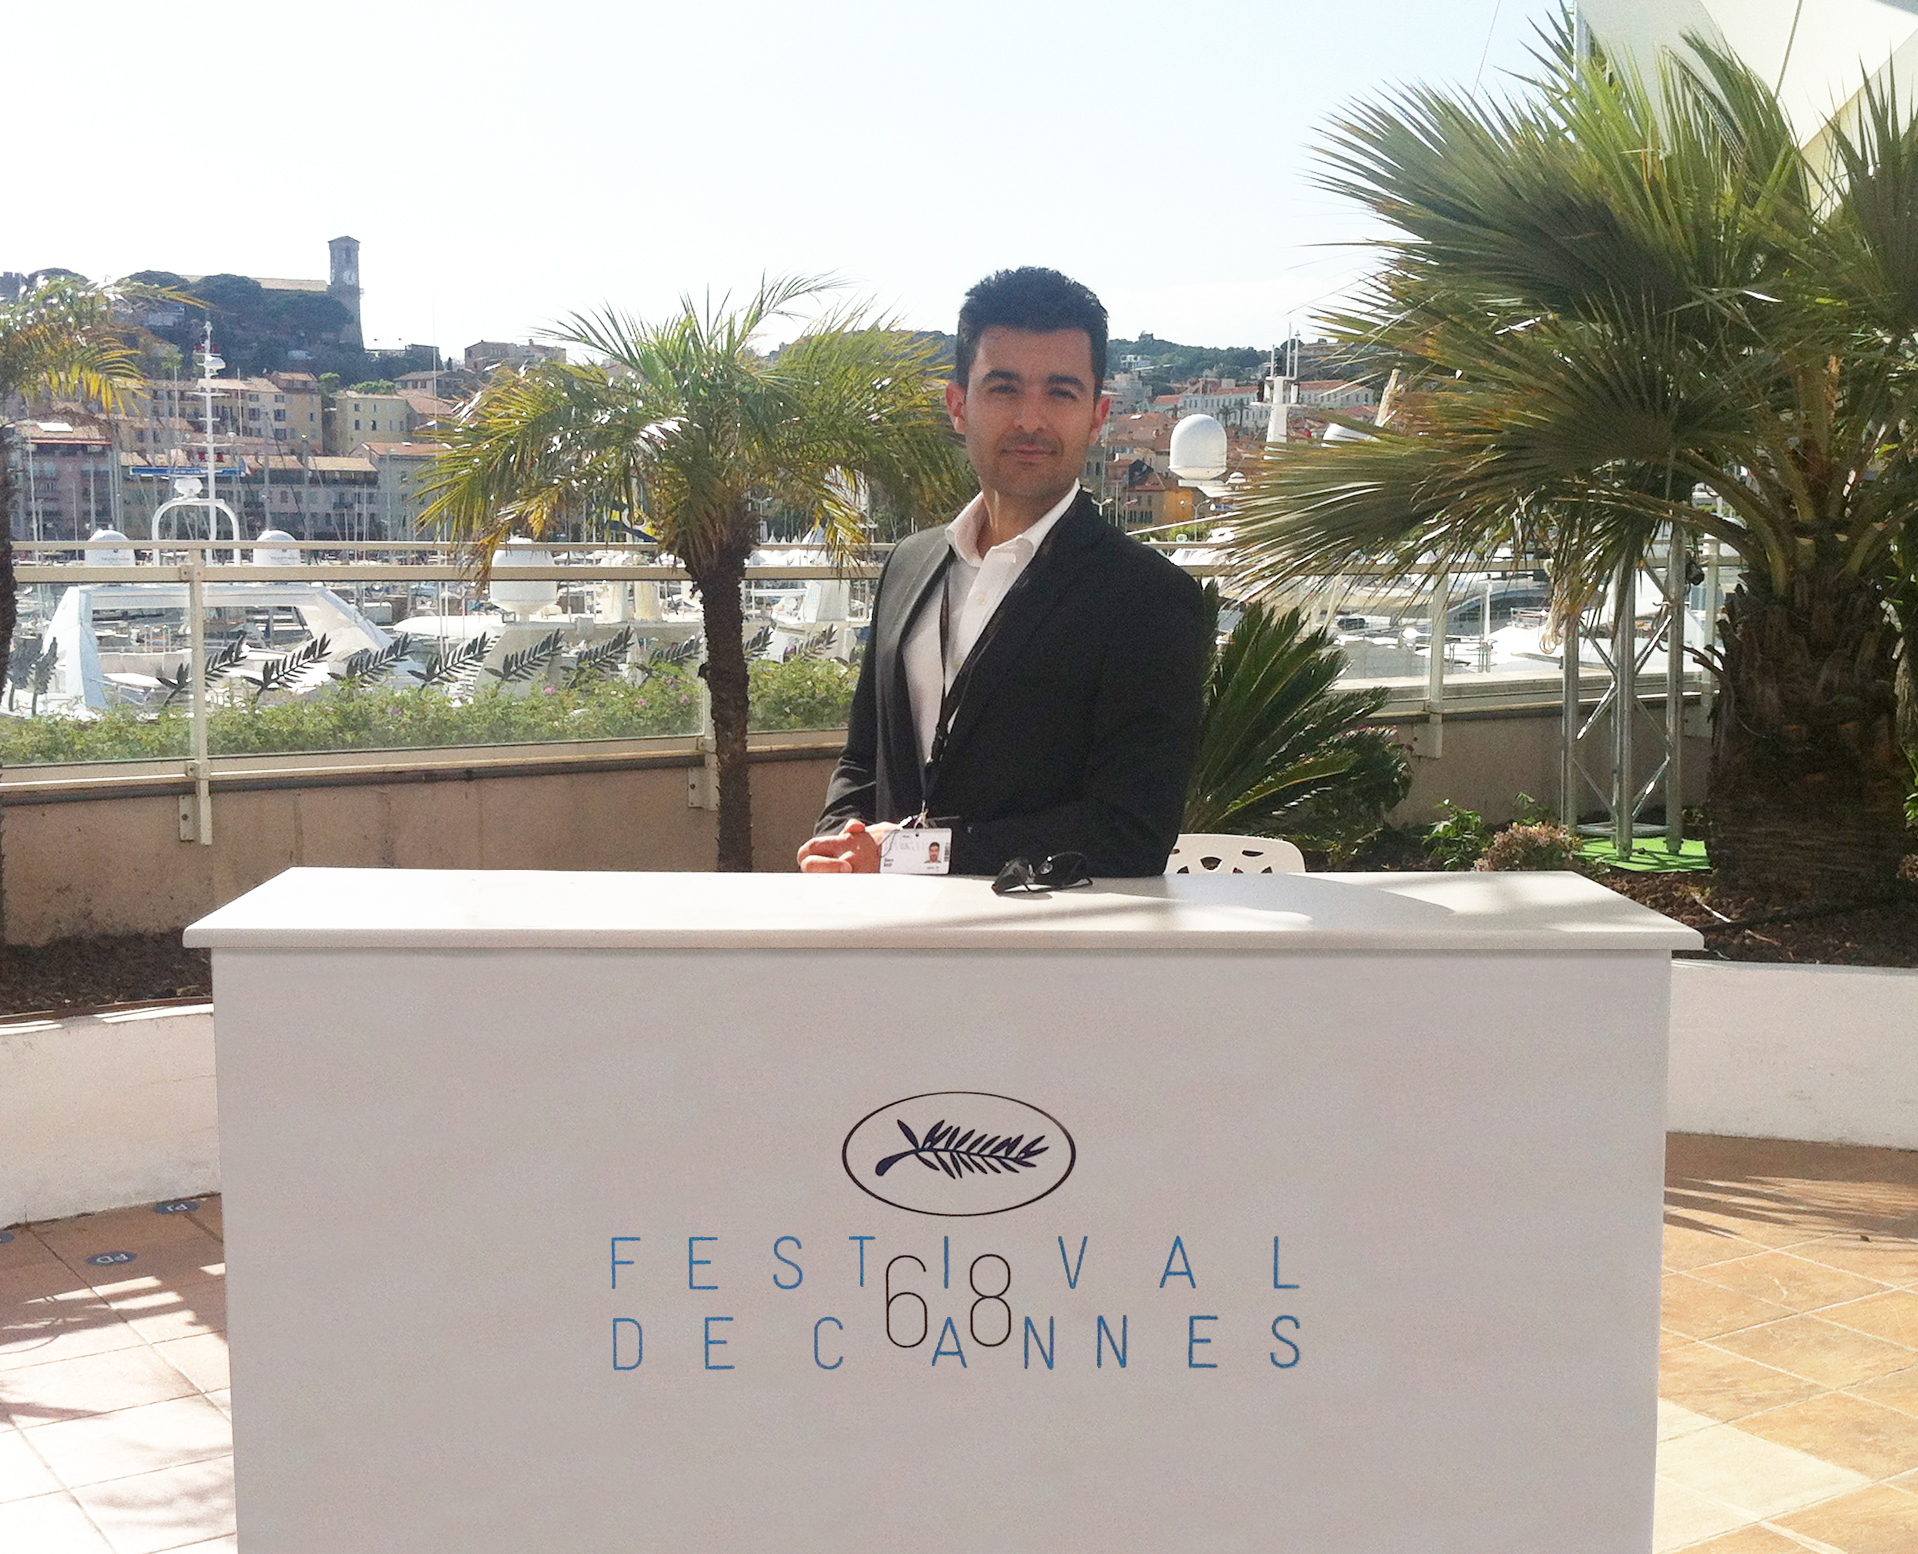 Shero Rauf in Cannes Film Festival